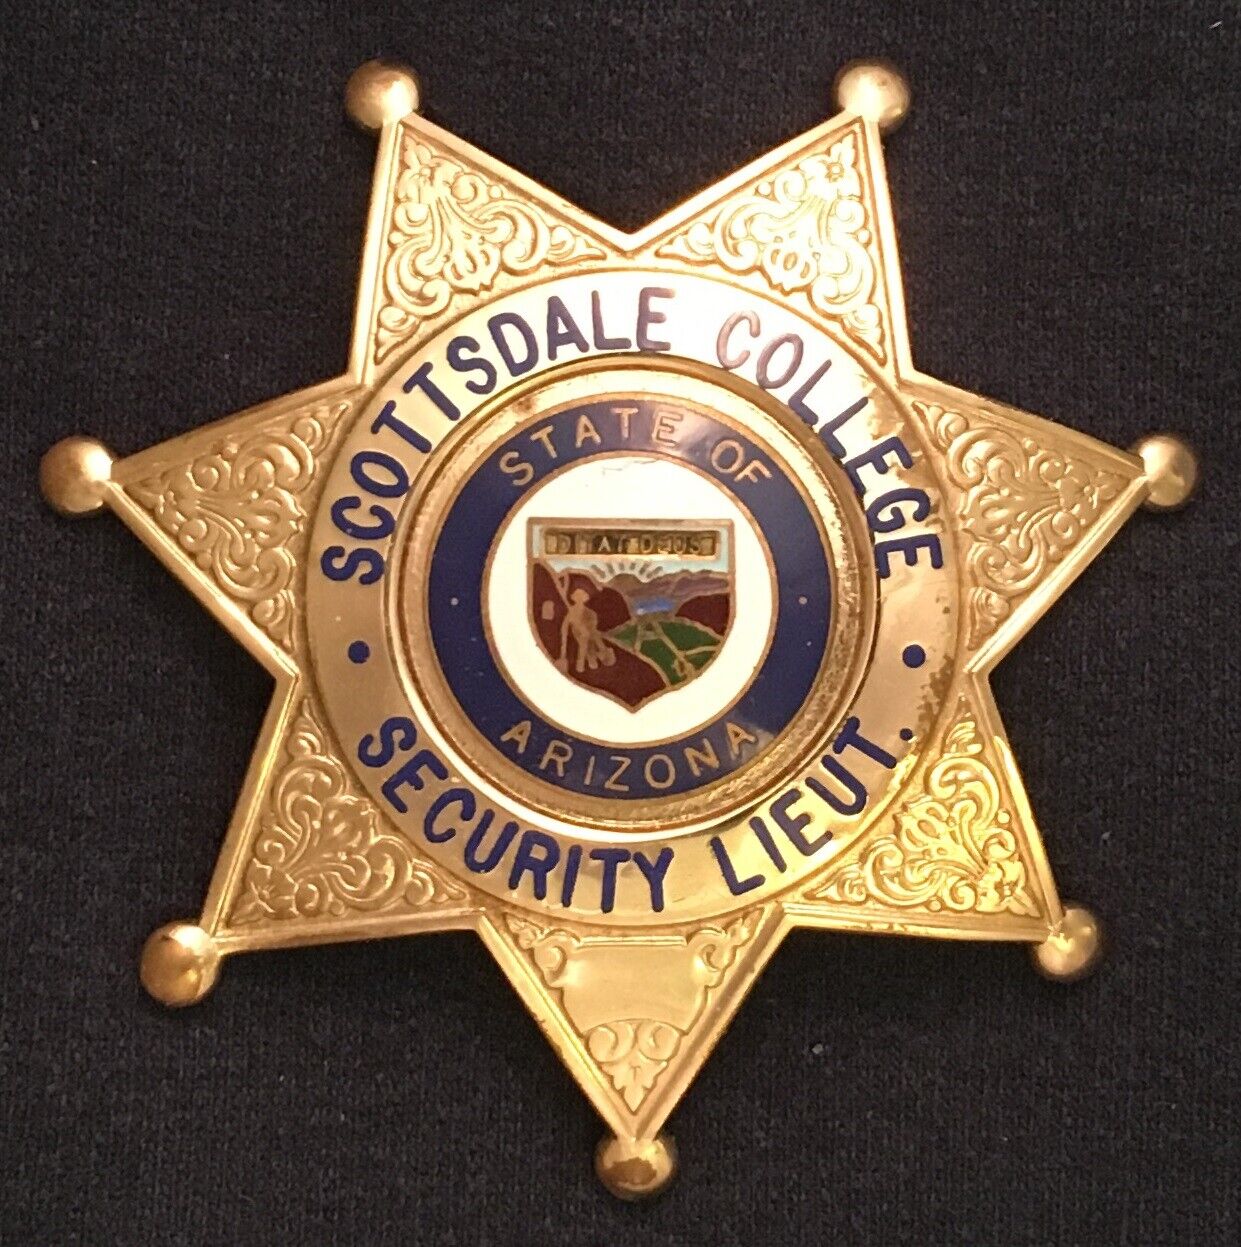 Obsolete Scottsdale College Security Lieutenant Badge Arizona